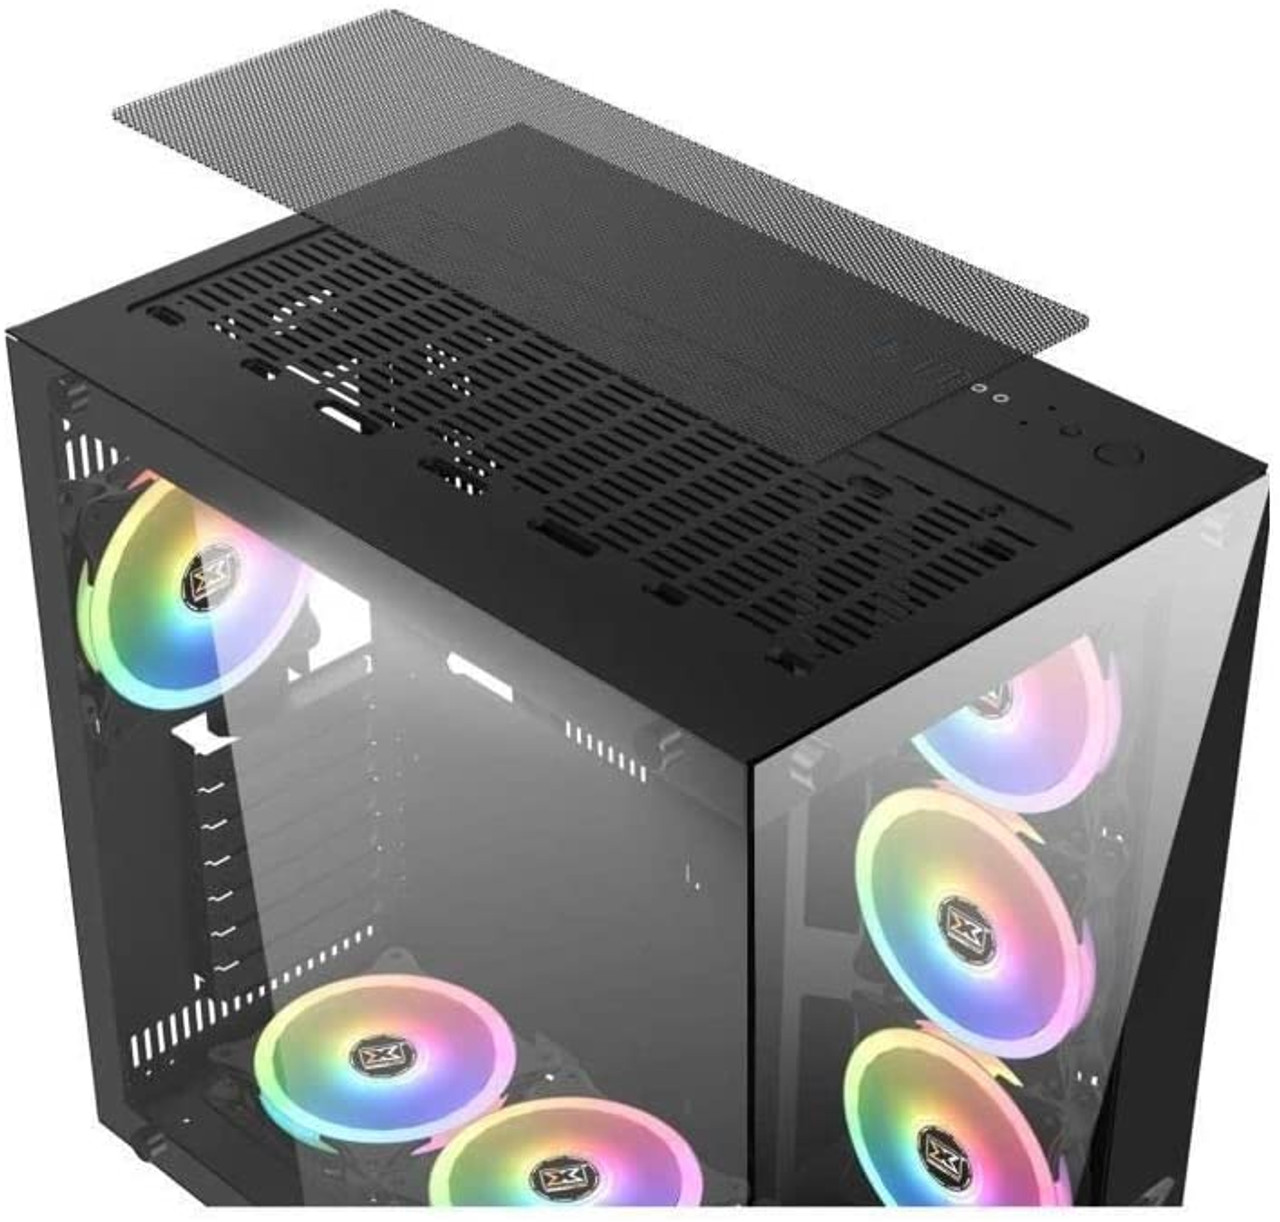 Xigmatek Aquarius Plus Mid Tower Case - Black USB 3.0, EN43354, AYOUB  COMPUTERS